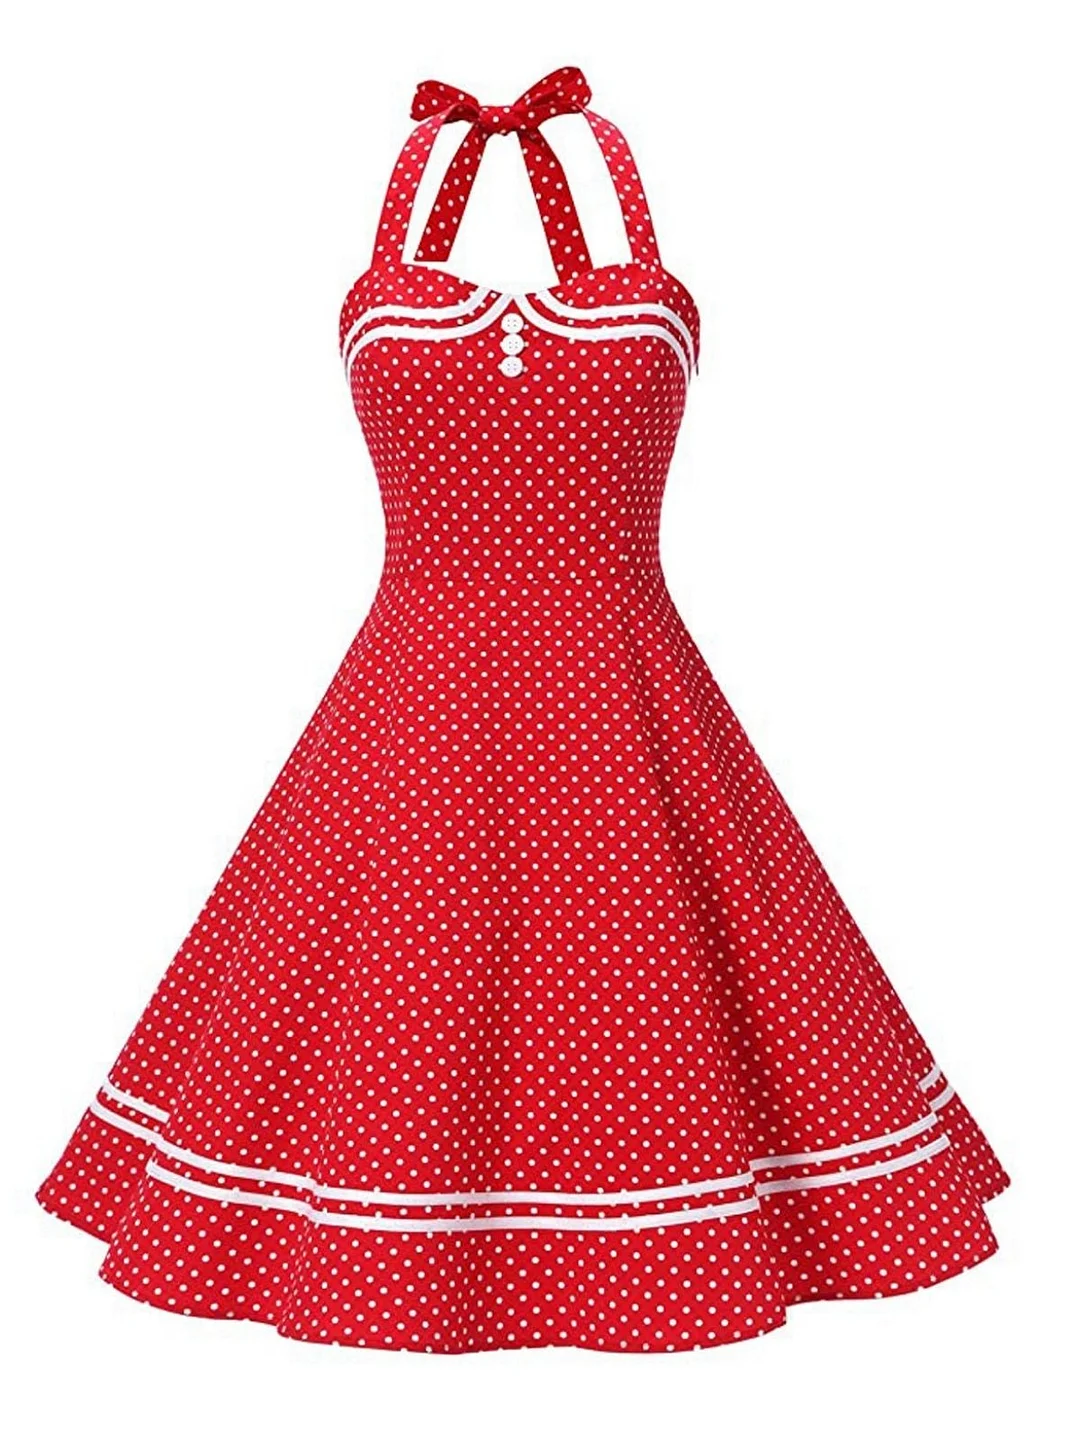 Red 1950s Halter Polka Dot Dress